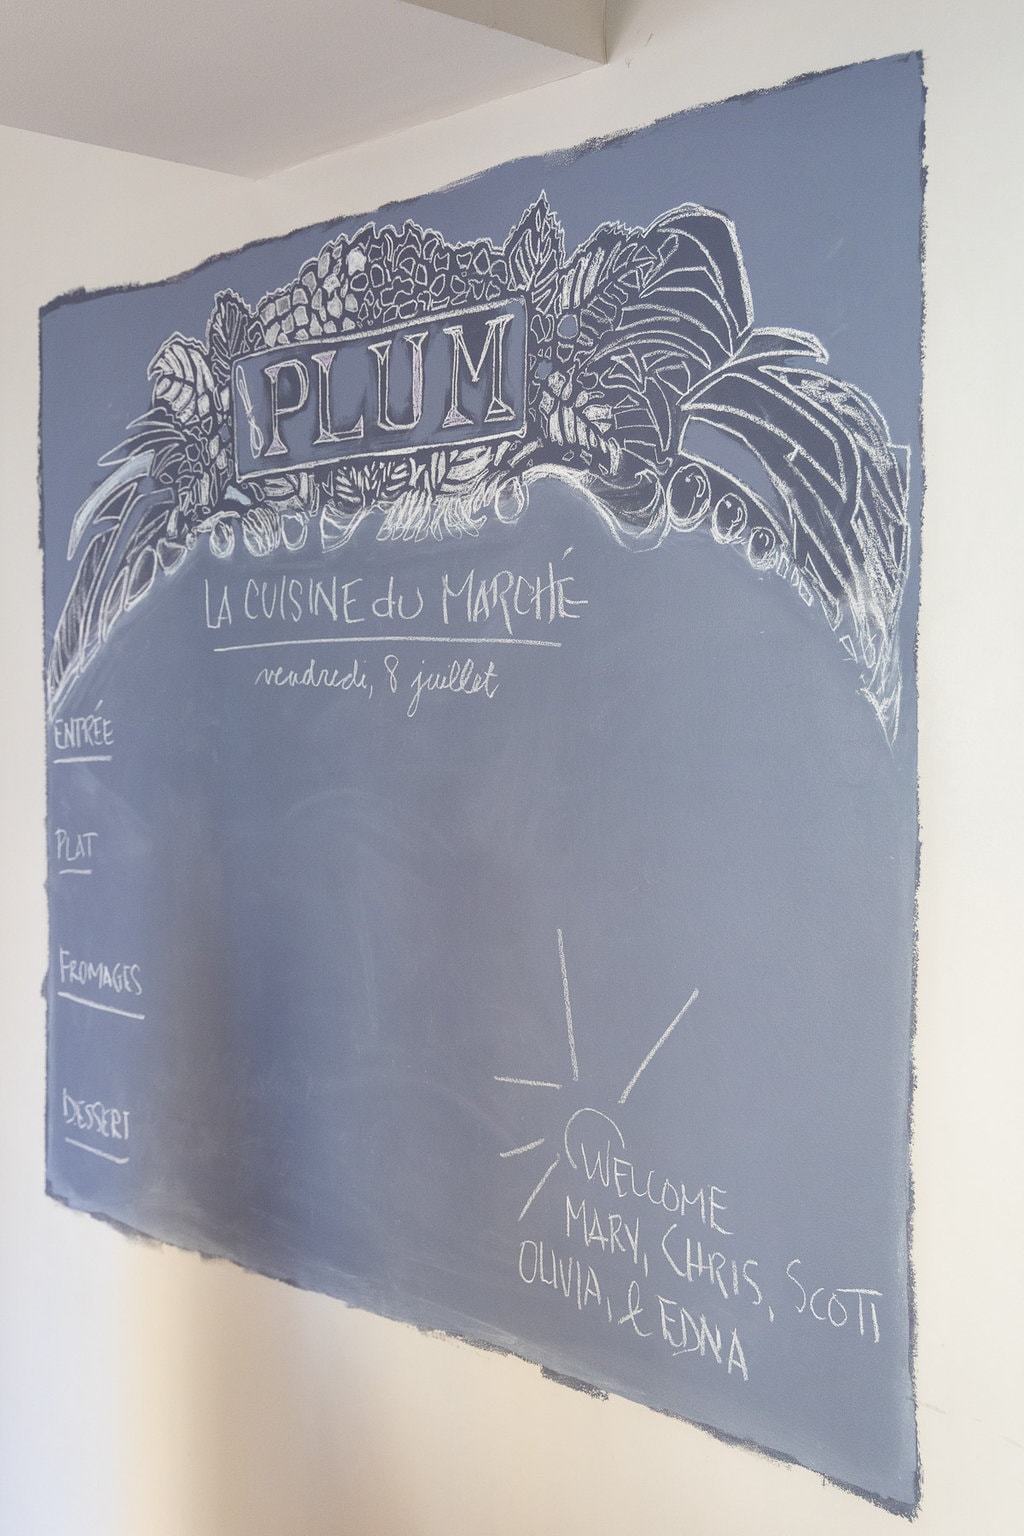 Vertical photo of the Plum Lyon cooking class menu board.